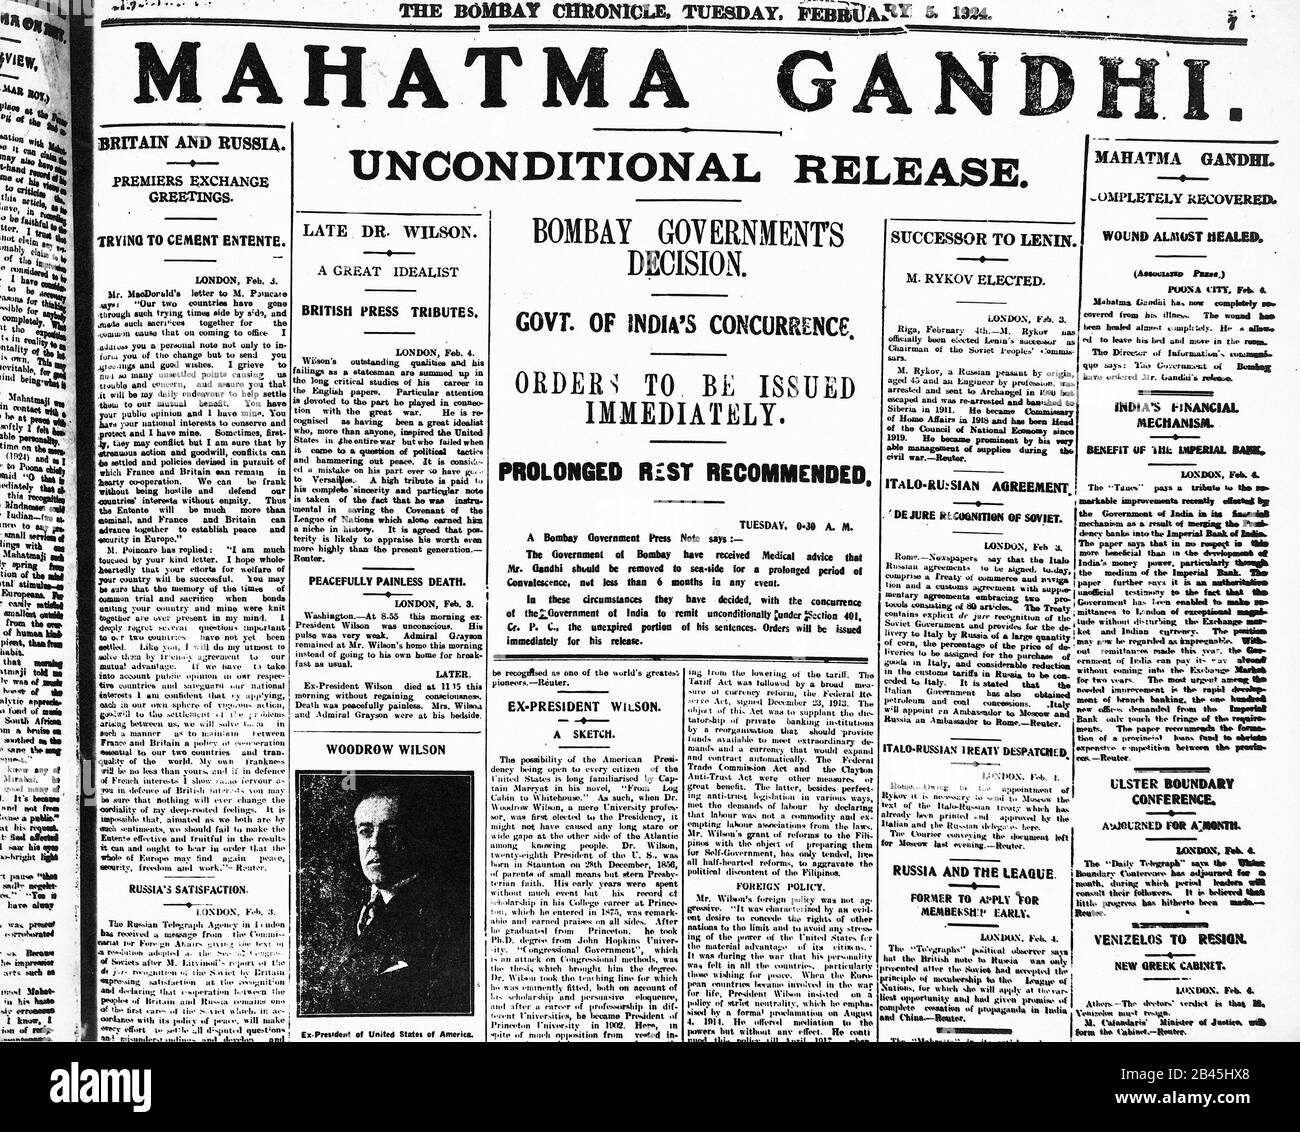 Mahatma Gandhi News auf der Titelseite der Zeitung The Bombay Chronicle, Bombay, Mumbai, Maharashtra, Indien, 5. Februar 1924, alter Jahrgang 1900s Bild Stockfoto